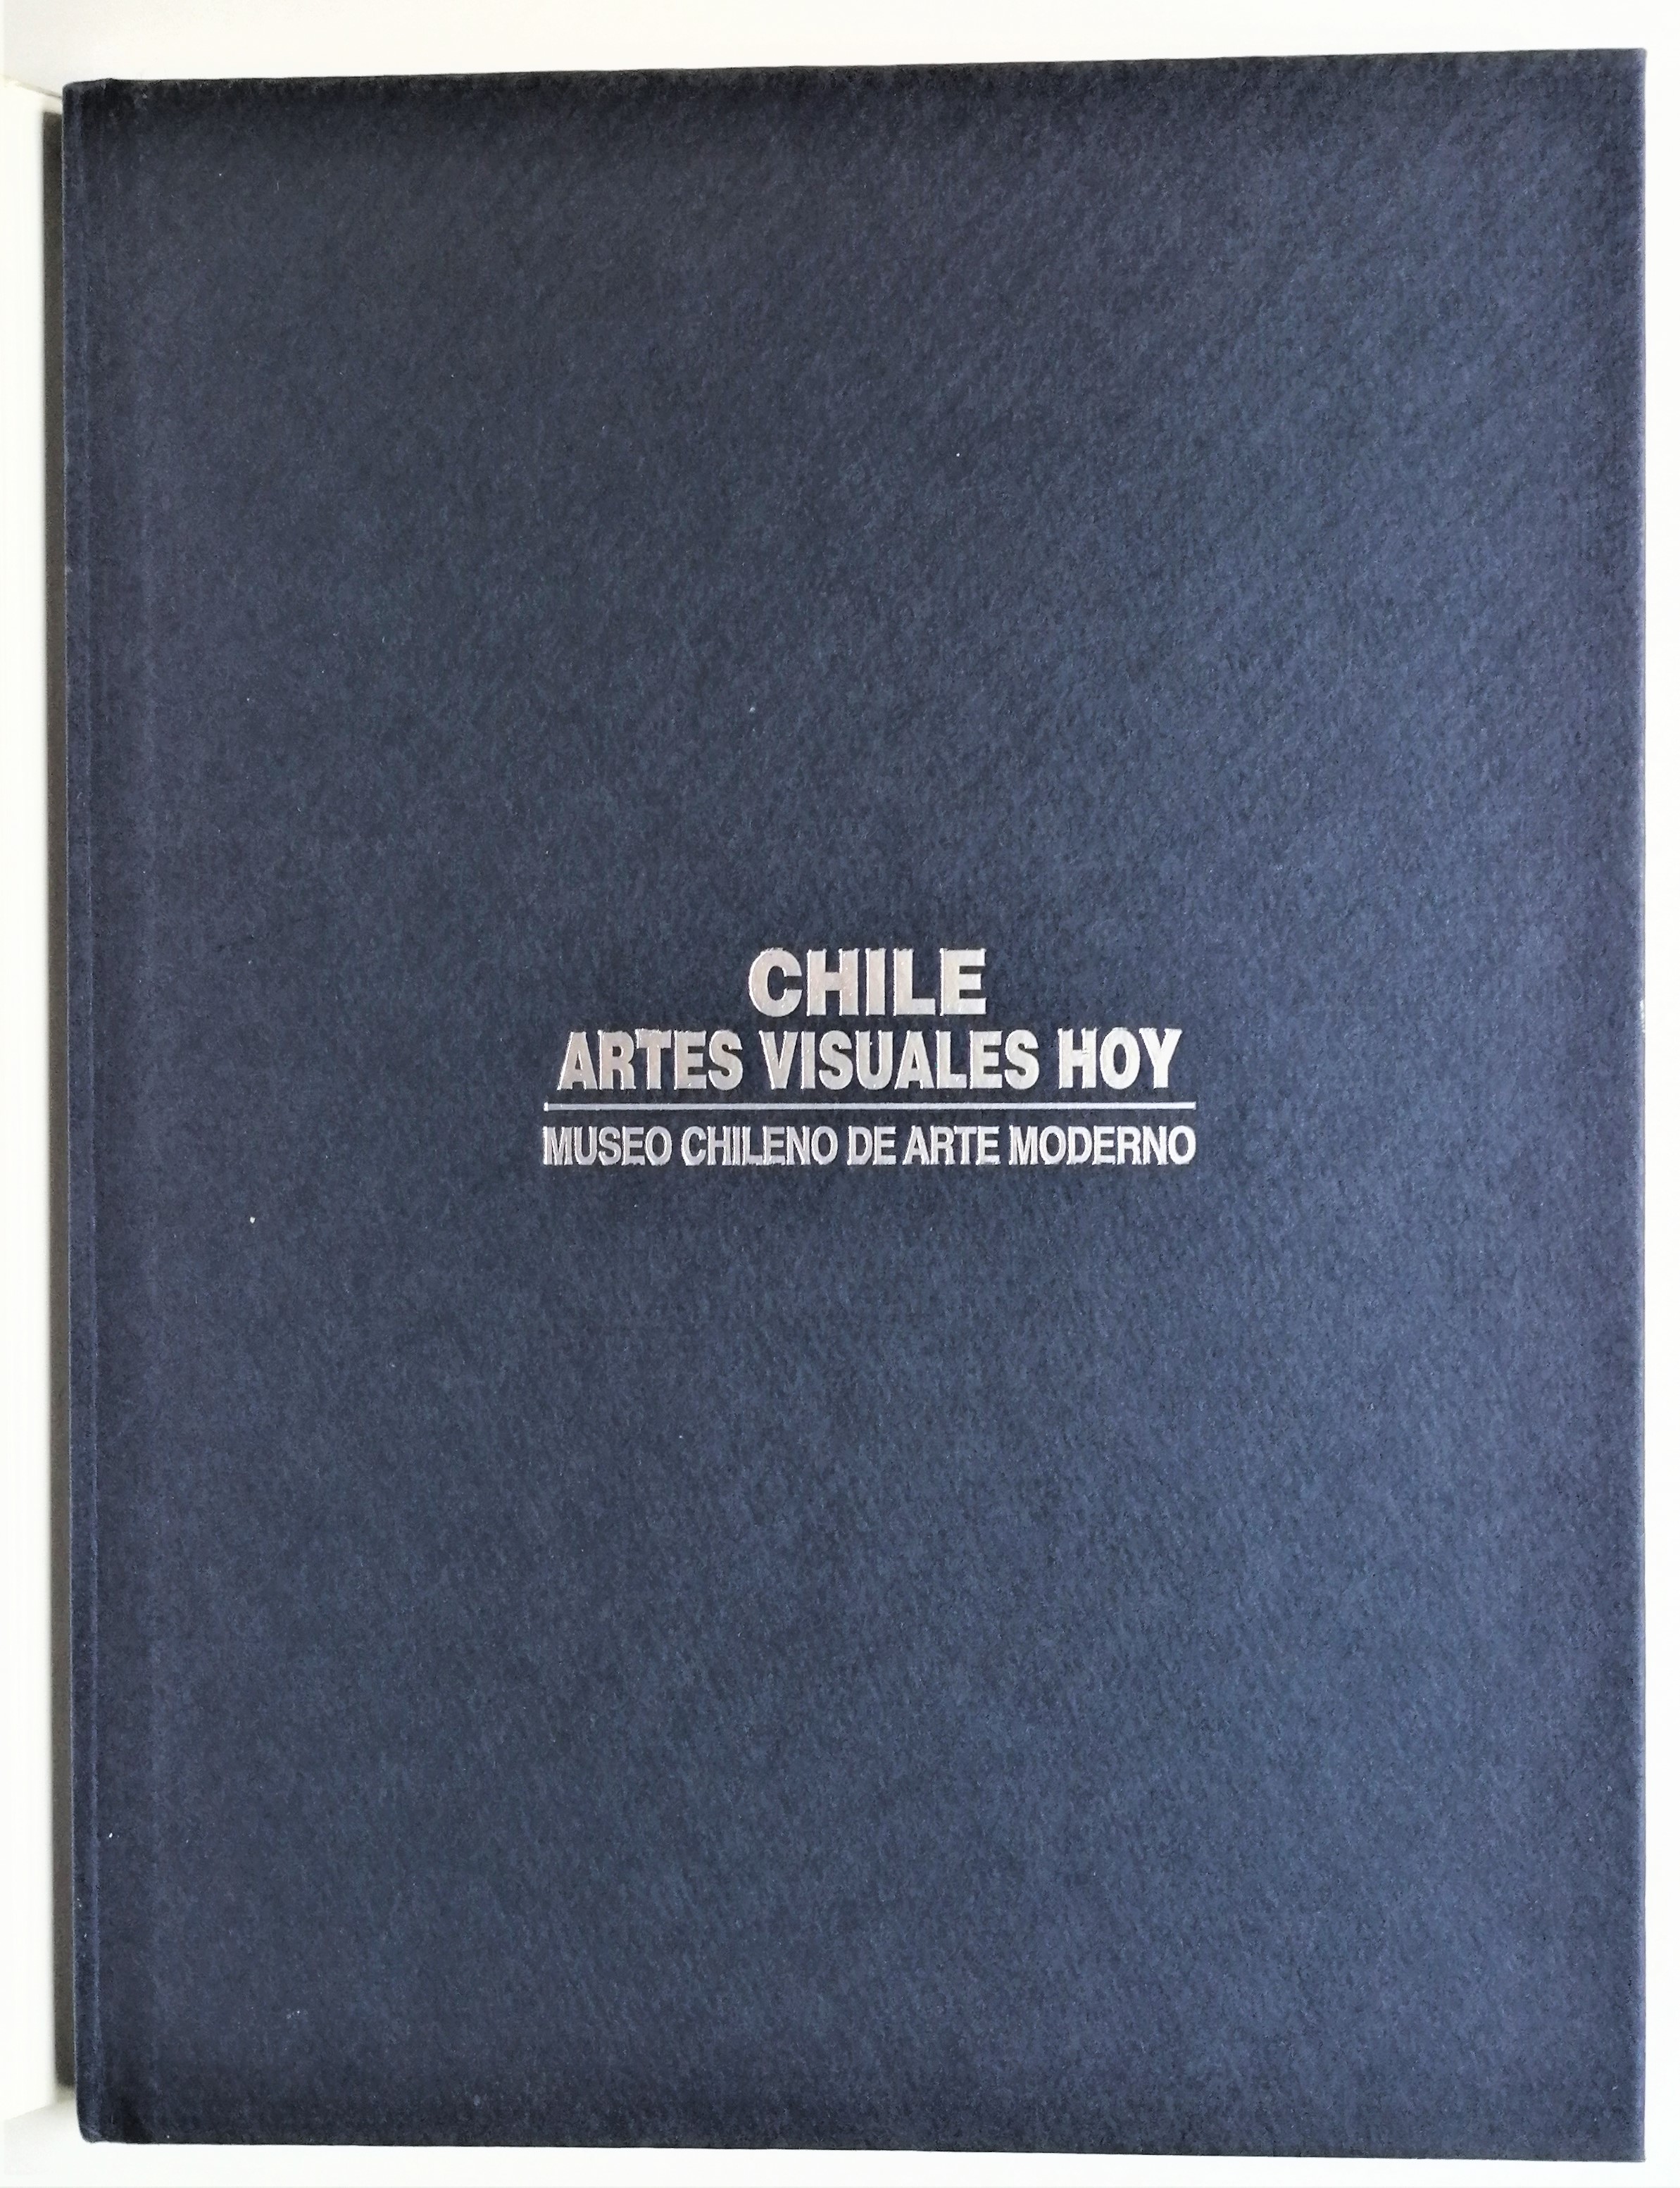 Chile Artes visuales hoy